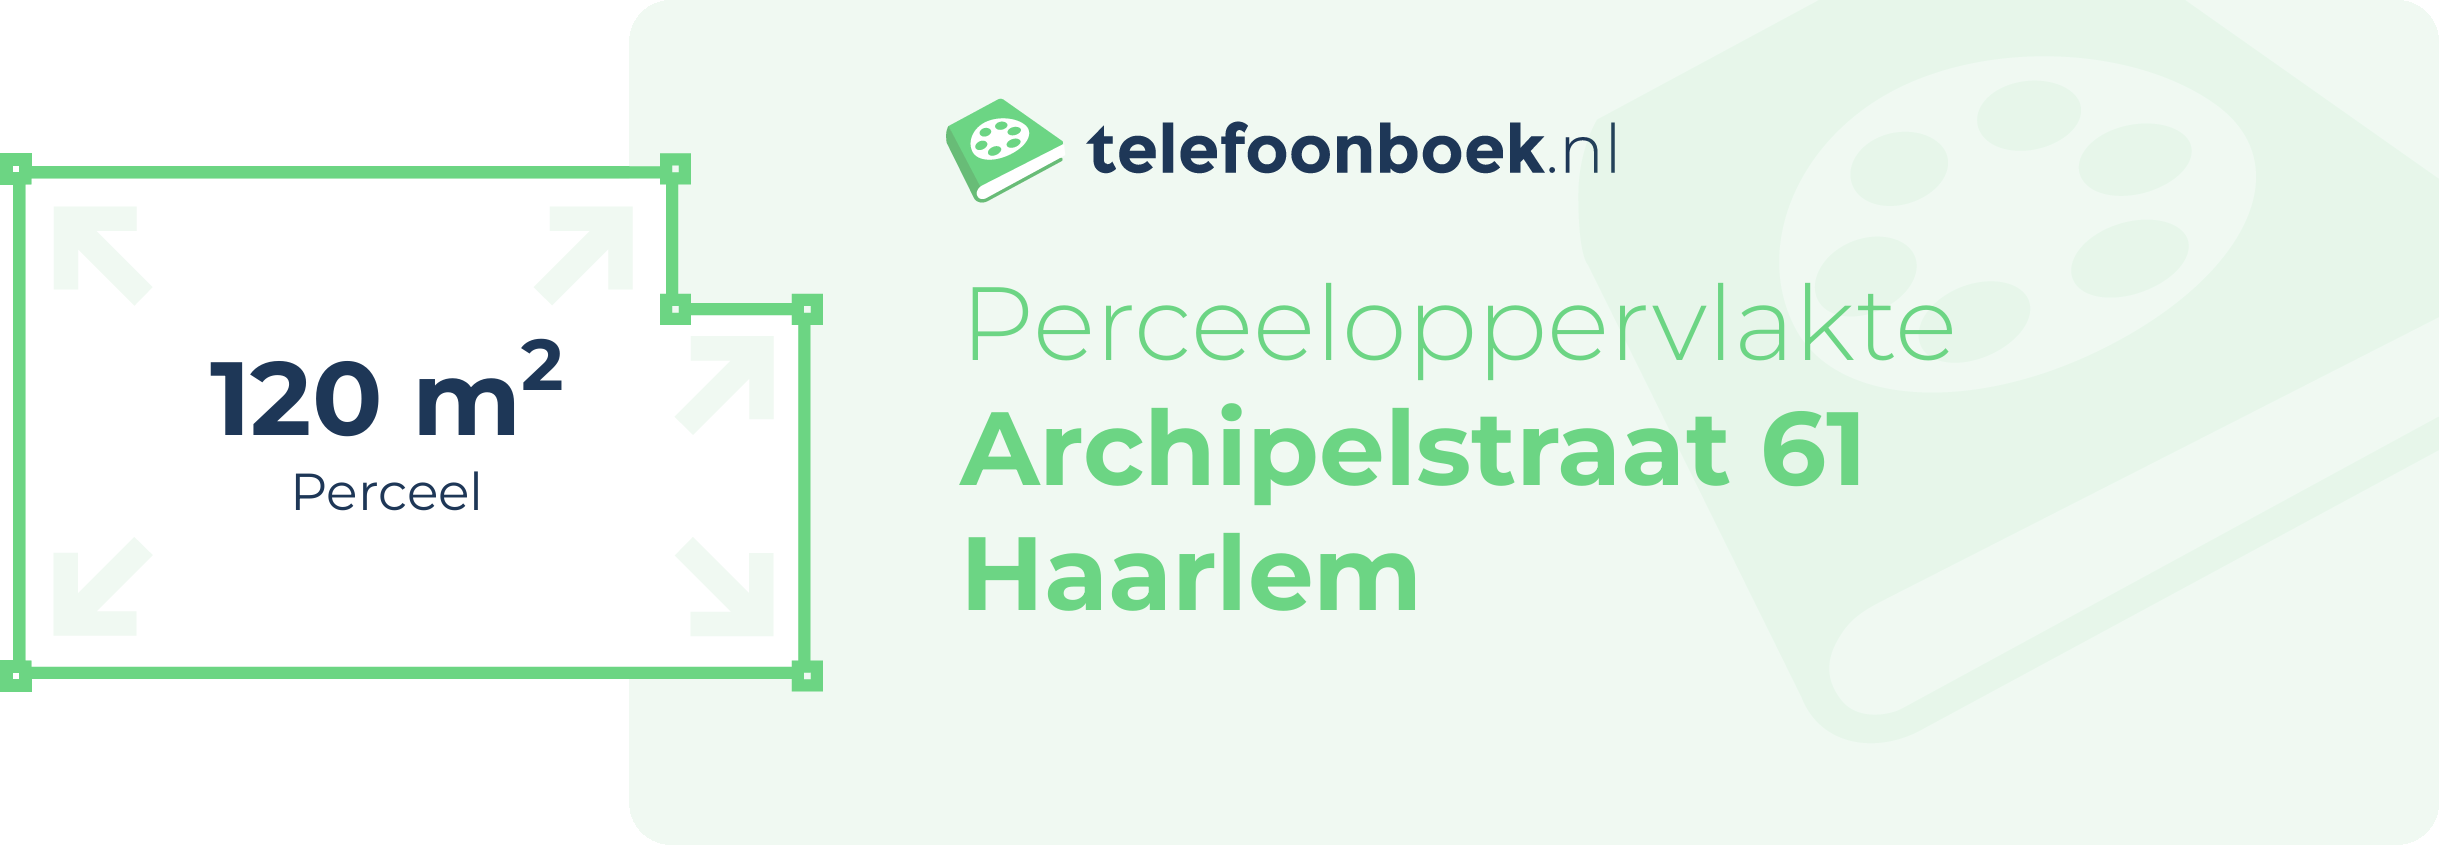 Perceeloppervlakte Archipelstraat 61 Haarlem